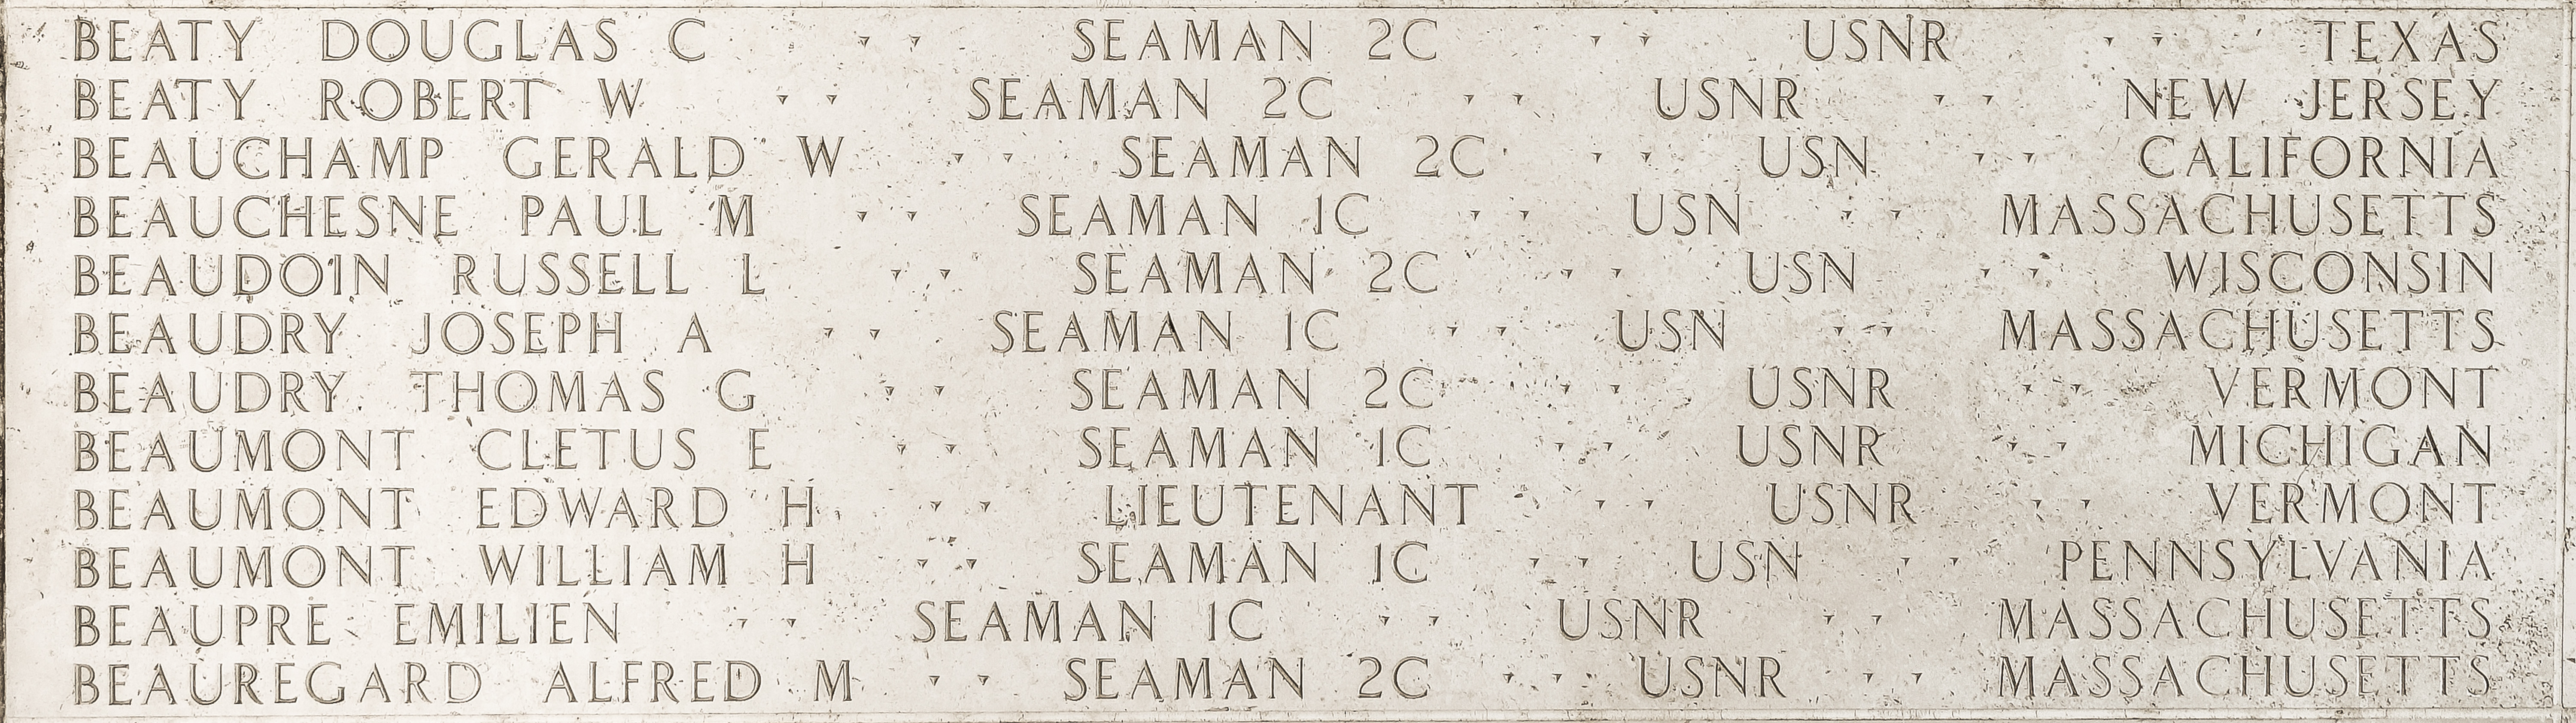 Paul M. Beauchesne, Seaman First Class